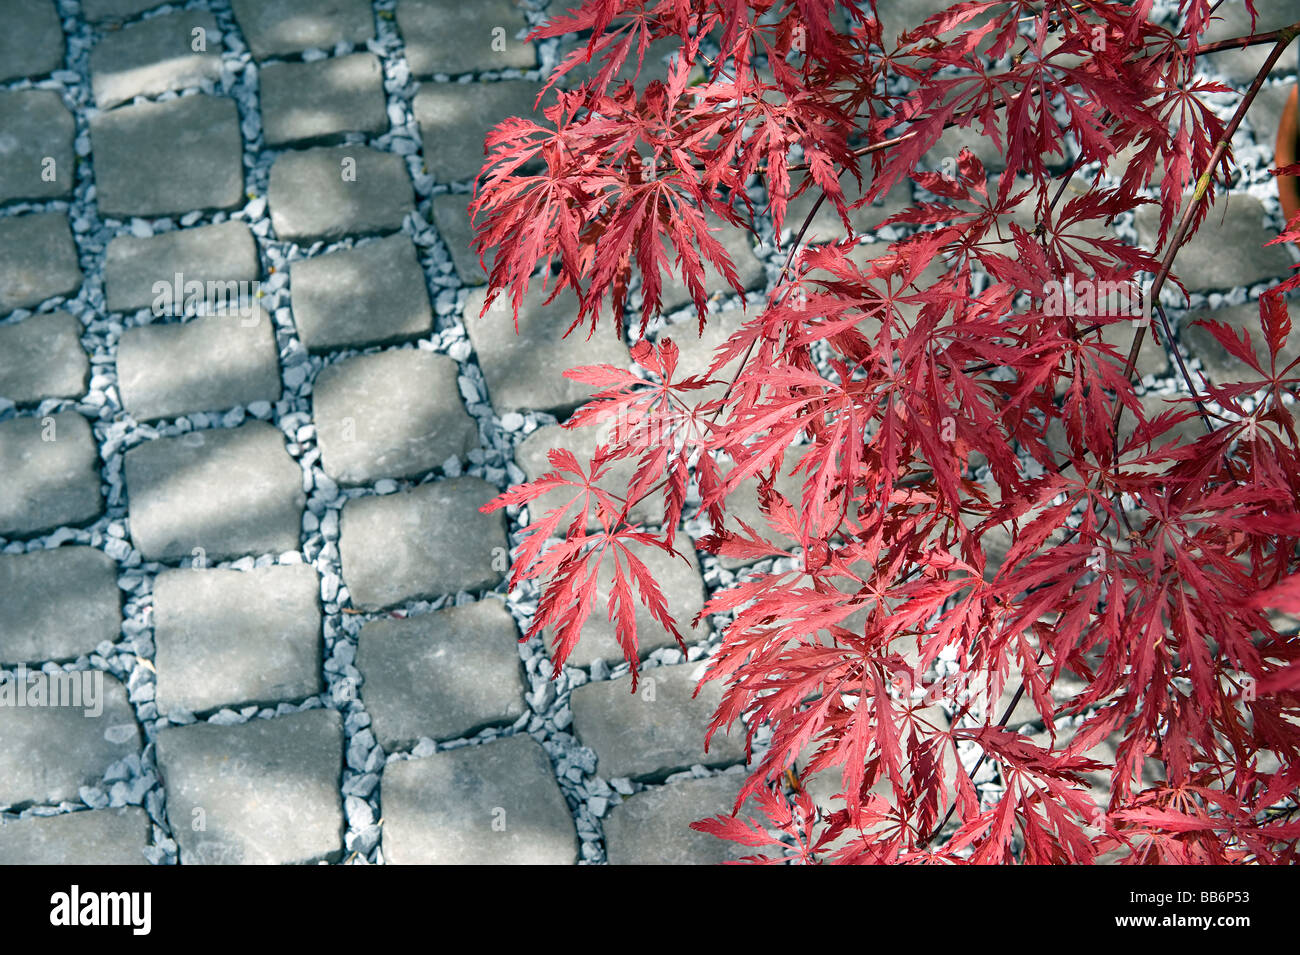 Rosso giapponese acer impianto su grigio ciottoli Foto Stock